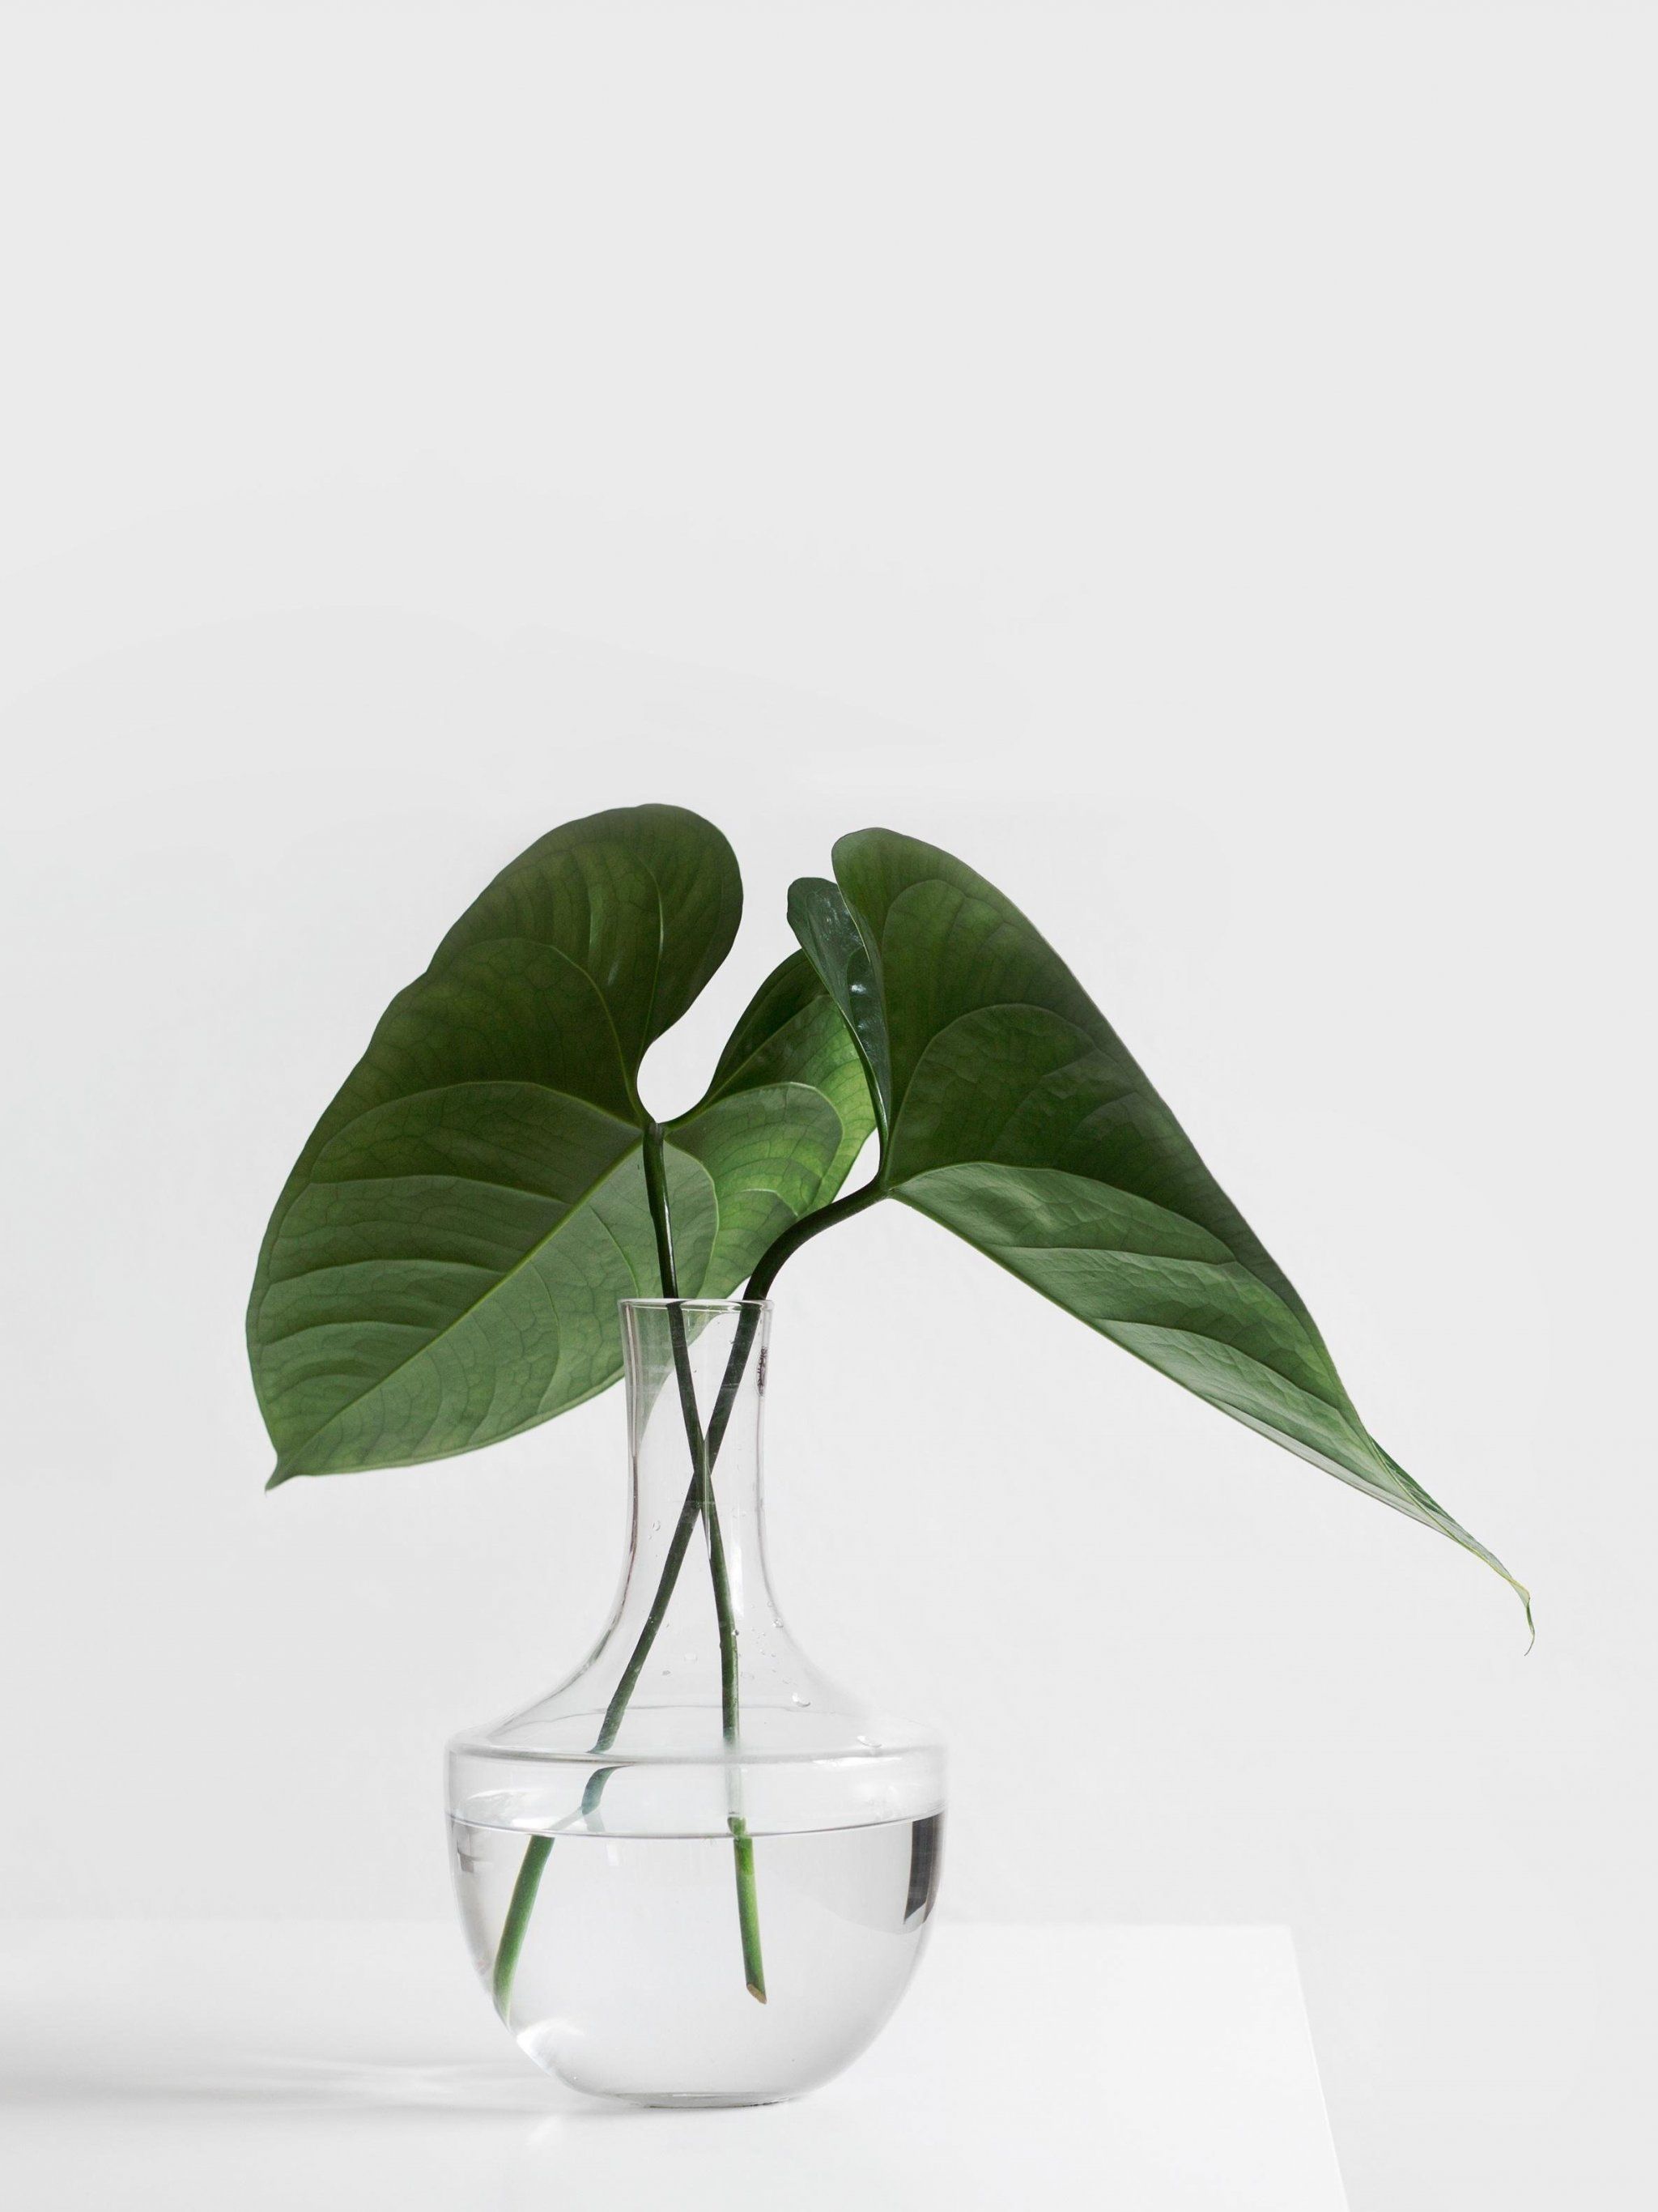  Zen Hintergrundbild 2048x2732. Minimalist Aesthetic Plant in Clear Vase Wallpaper, Android & Desktop Background